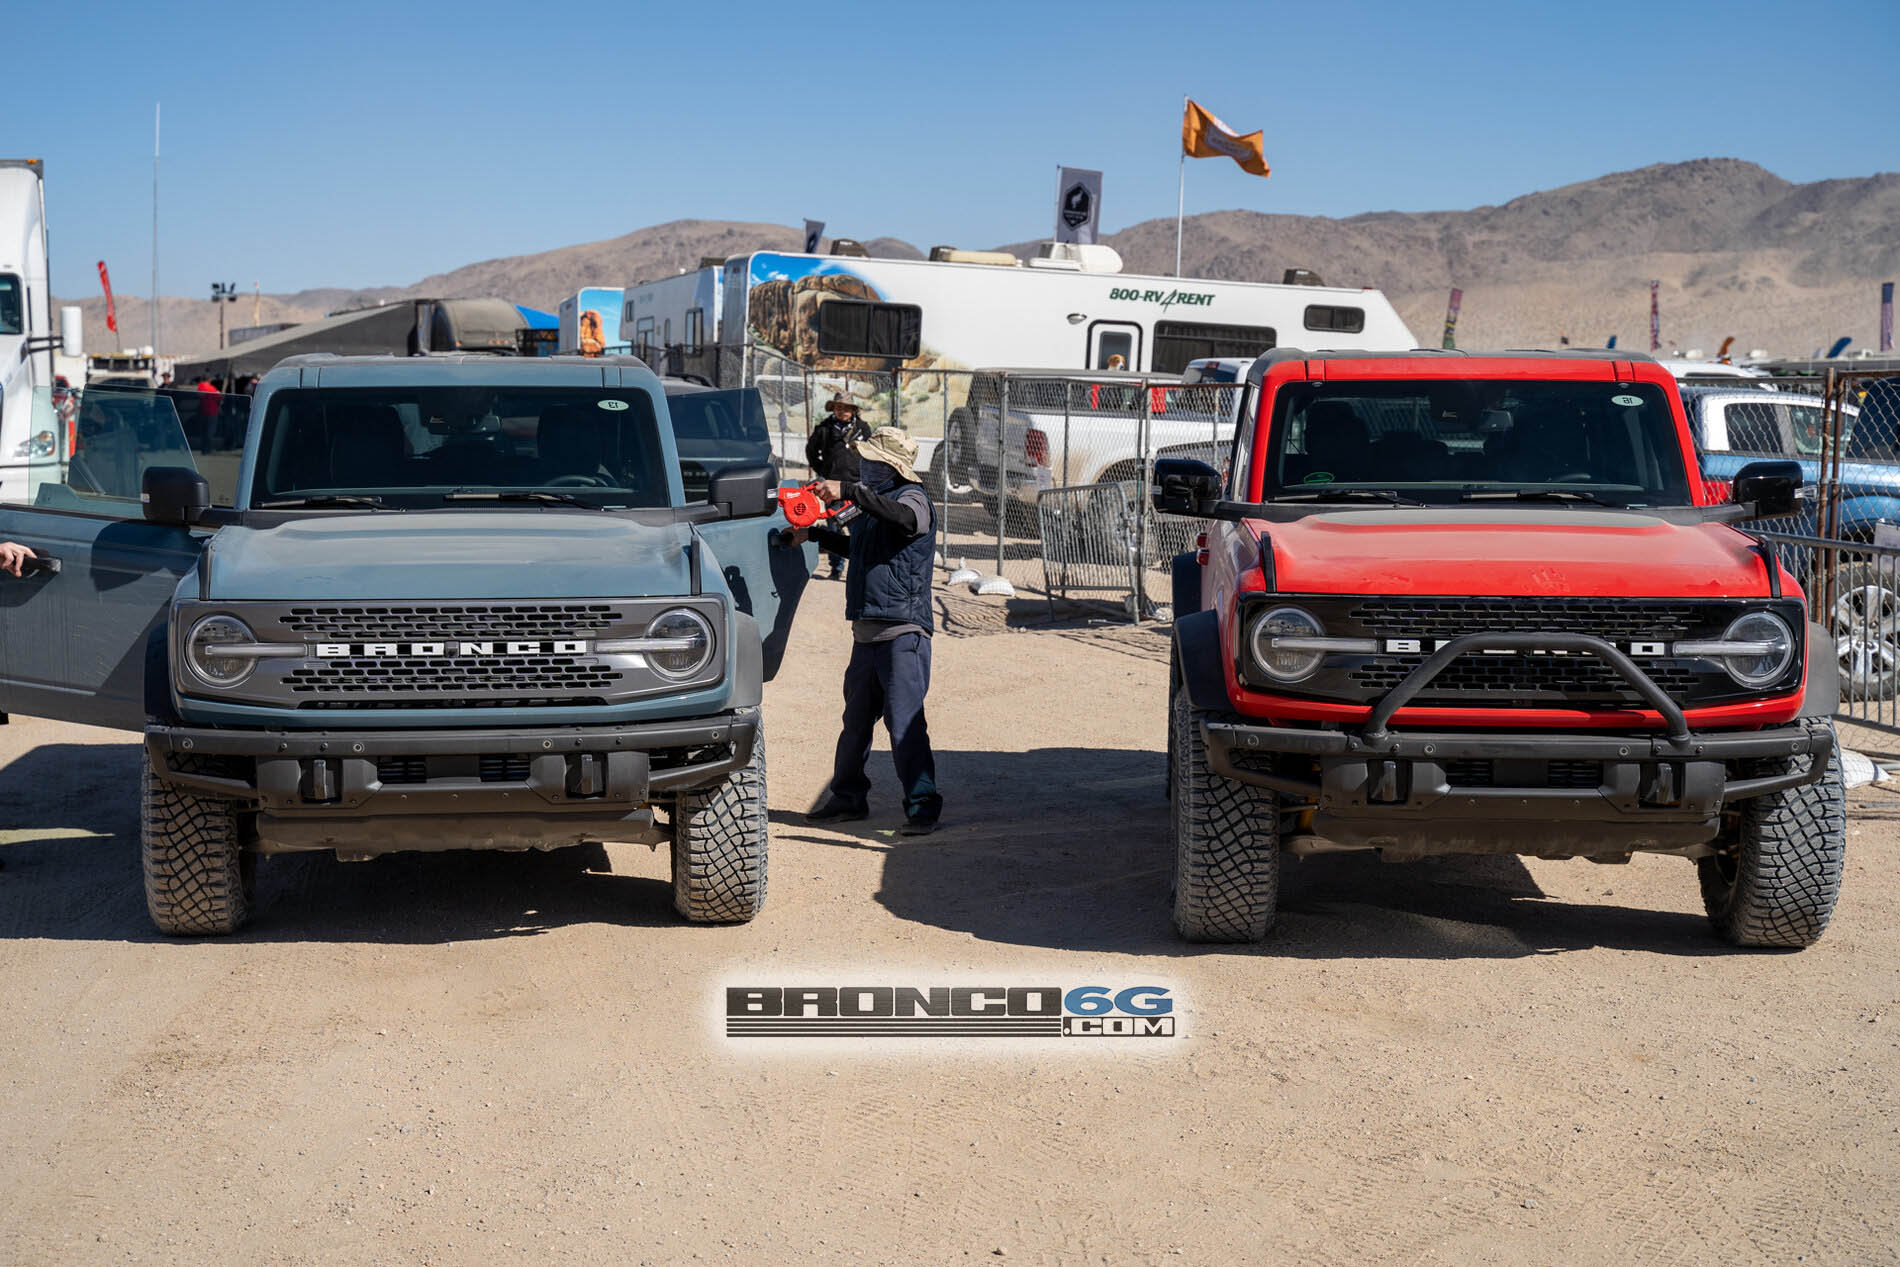 Ford Bronco Badlands vs Wildtrak side by side 01CF7AEE-D3C6-417C-B614-DA0307D14303